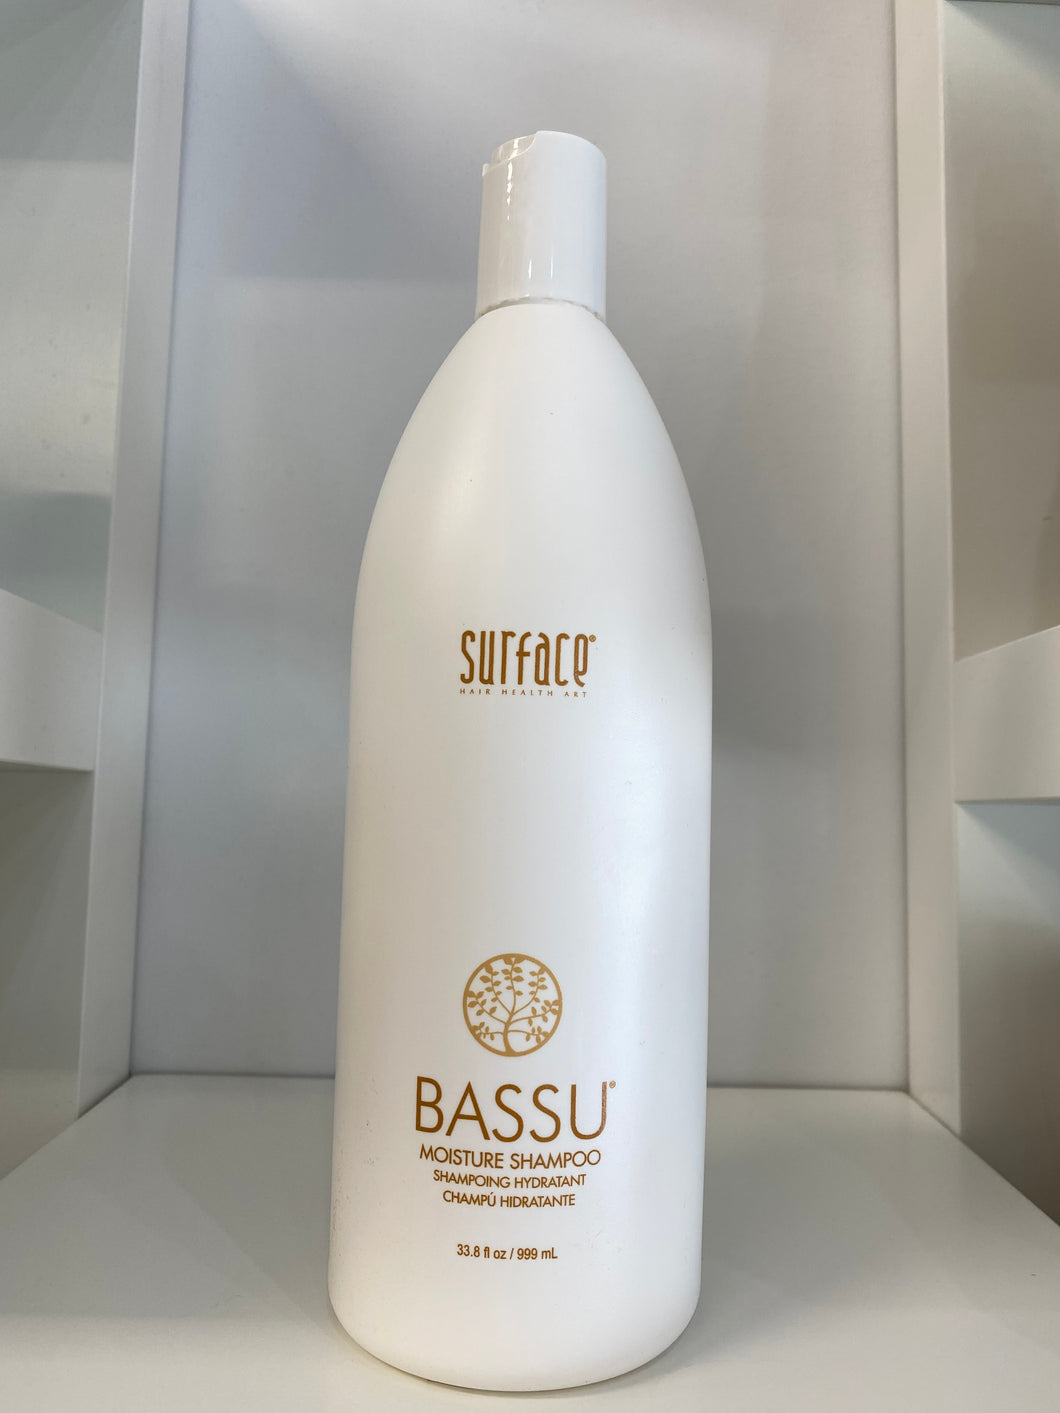 Bassu moisture shampoo litre